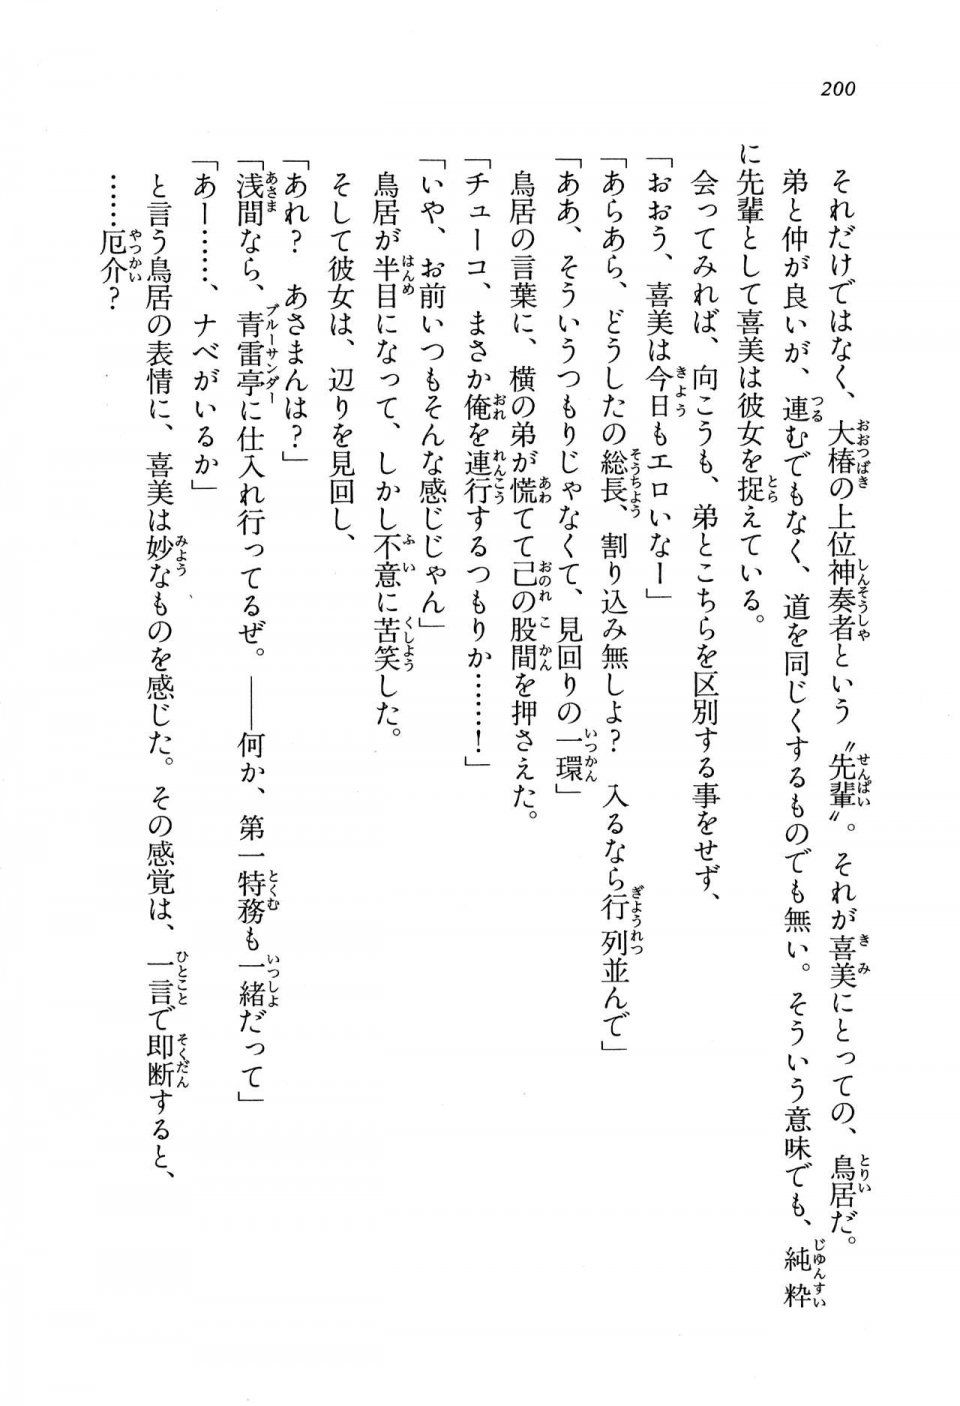 Kyoukai Senjou no Horizon BD Special Mininovel Vol 8(4B) - Photo #204